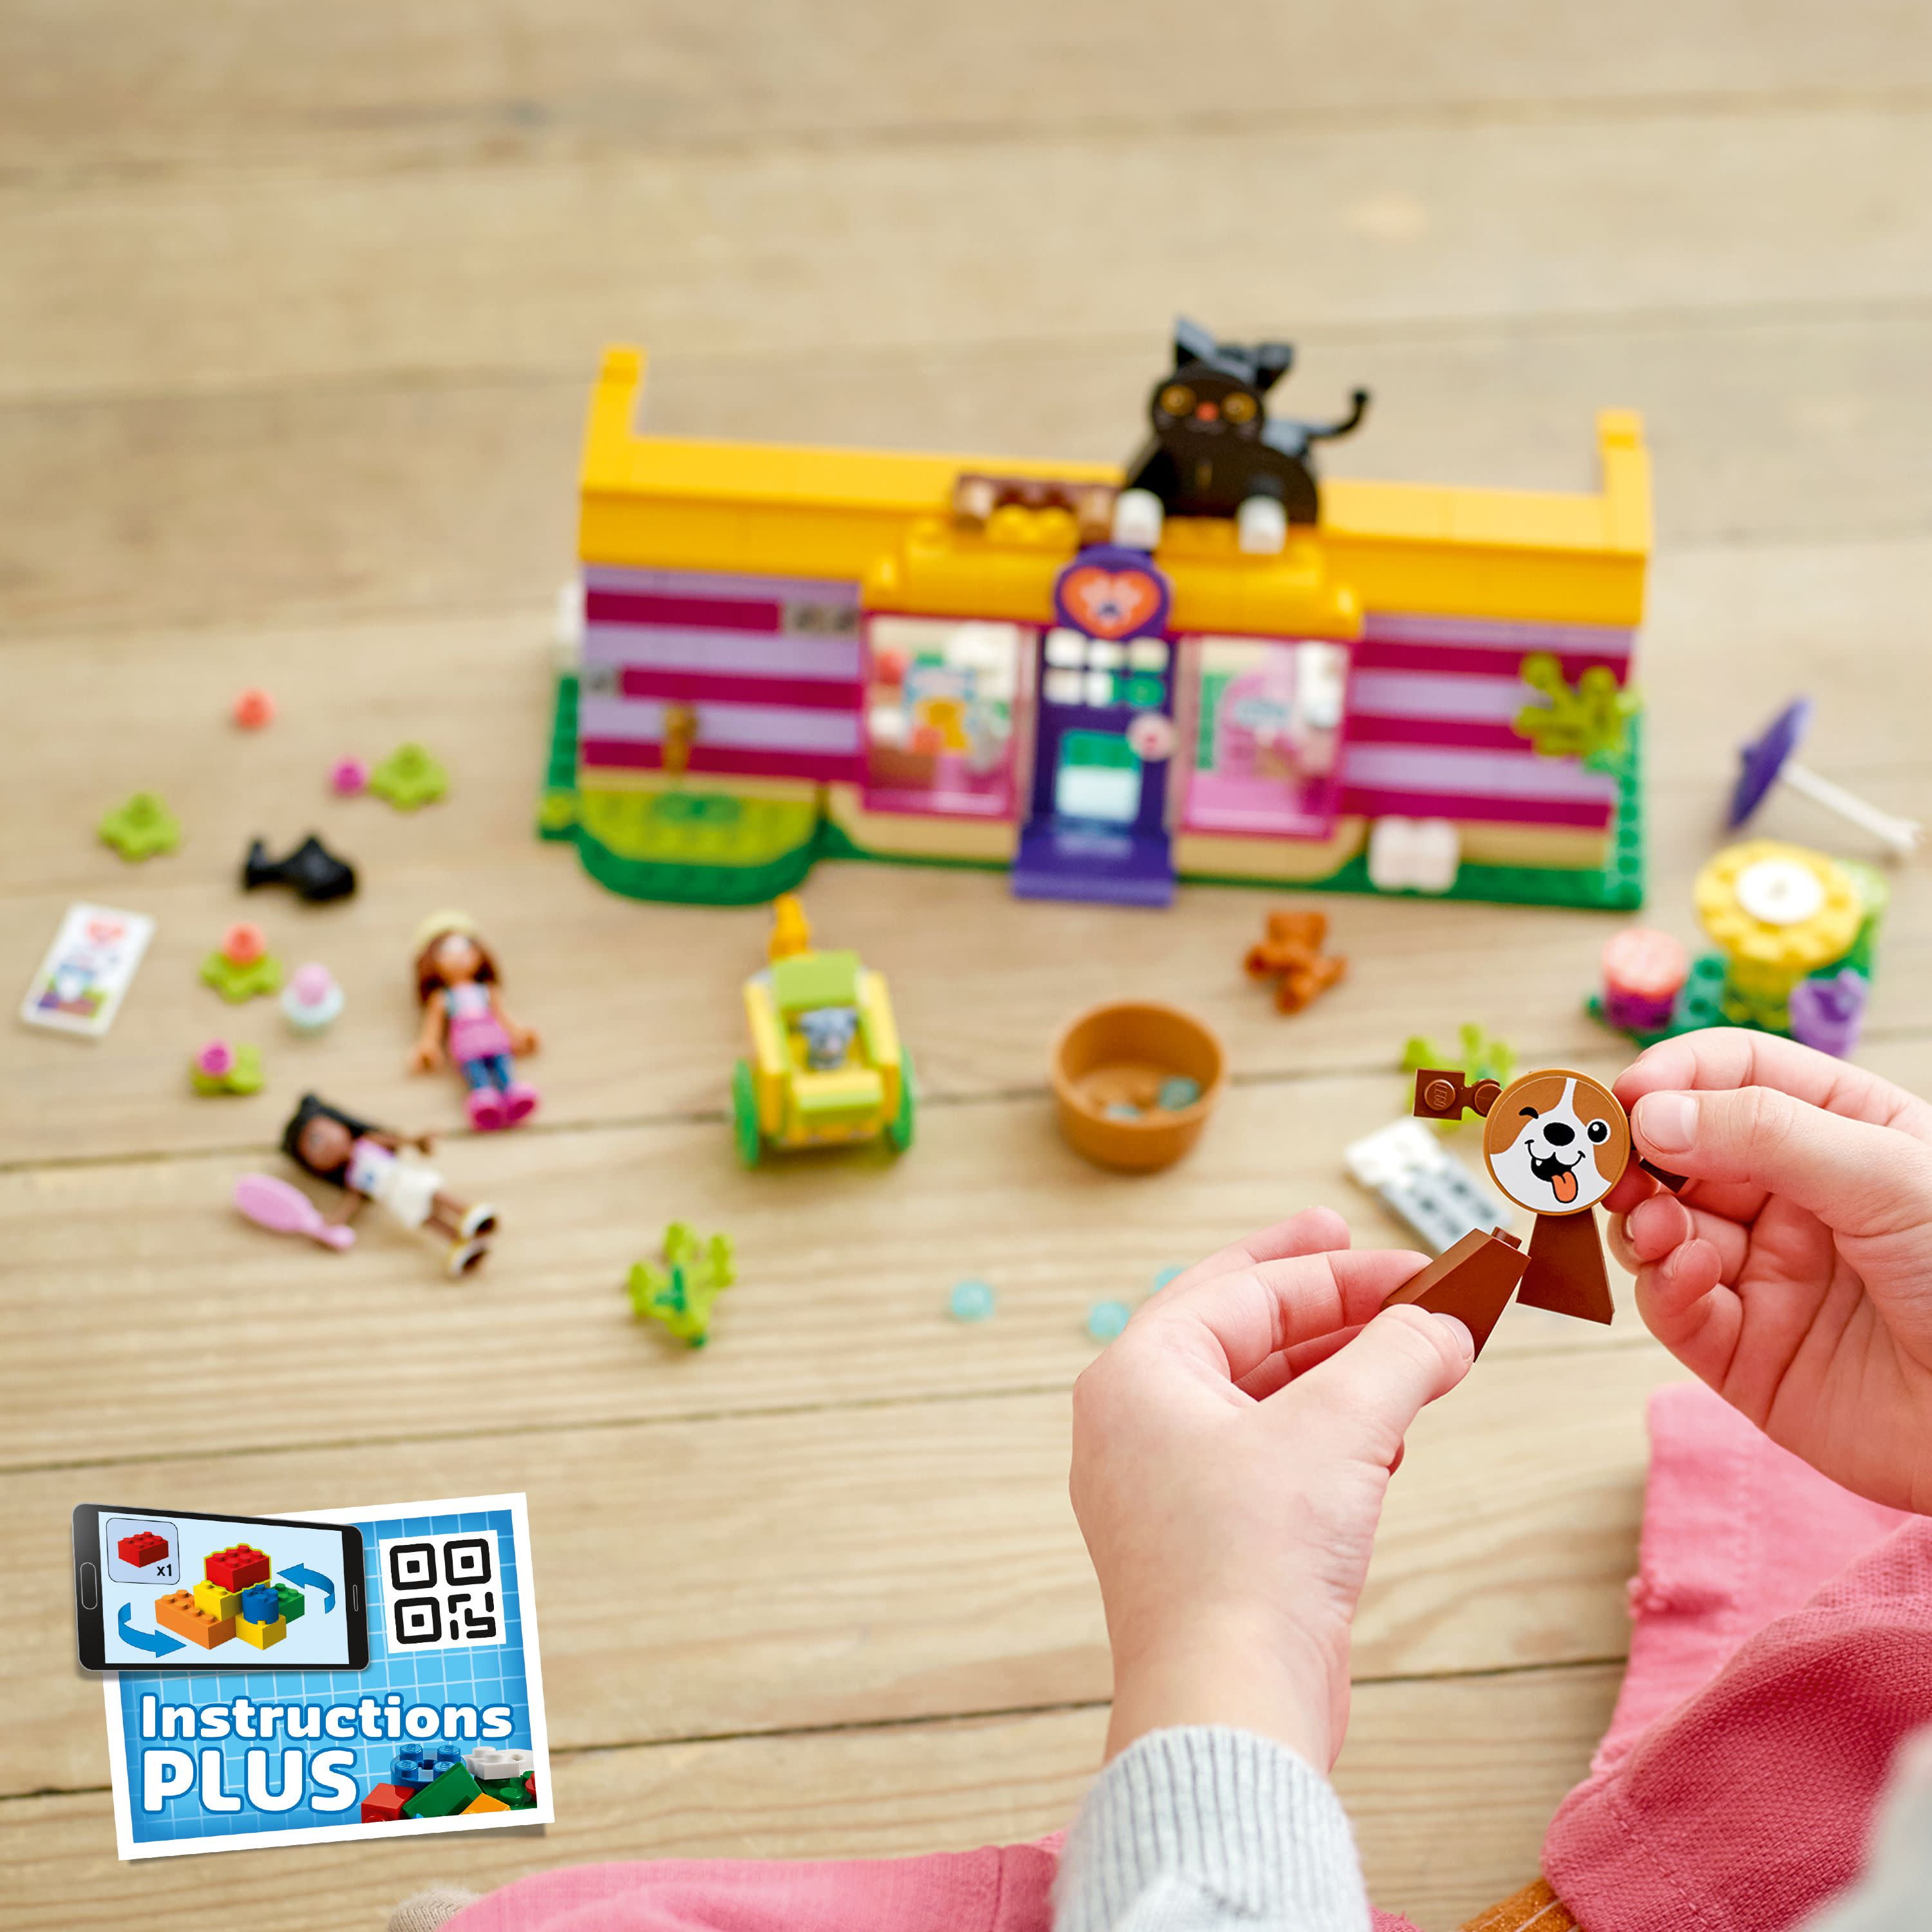 Toy Pets & Figures  Official LEGO® Shop US